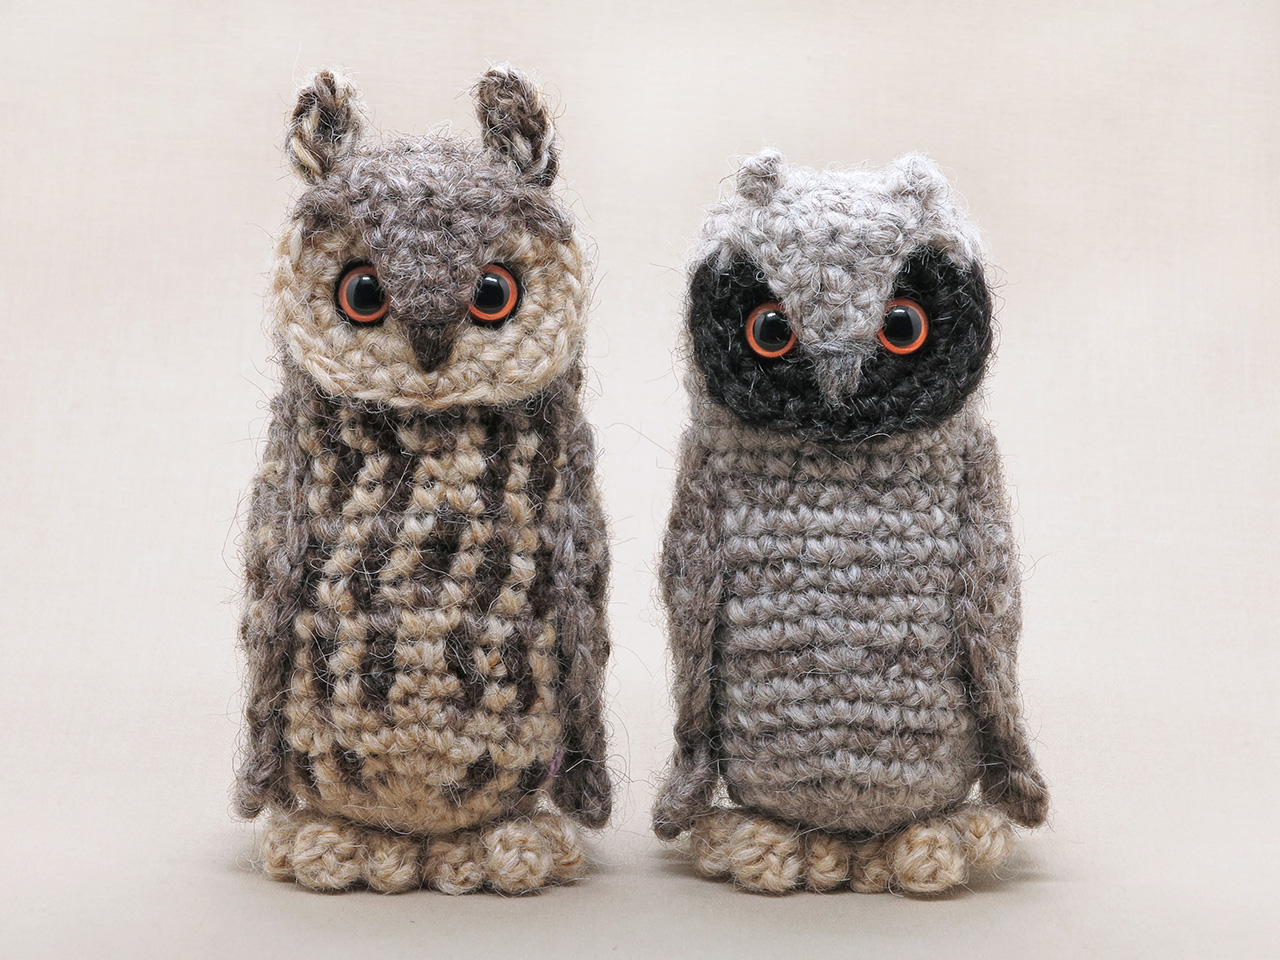 Crochet animal patterns designed by Sonja van der Wijk